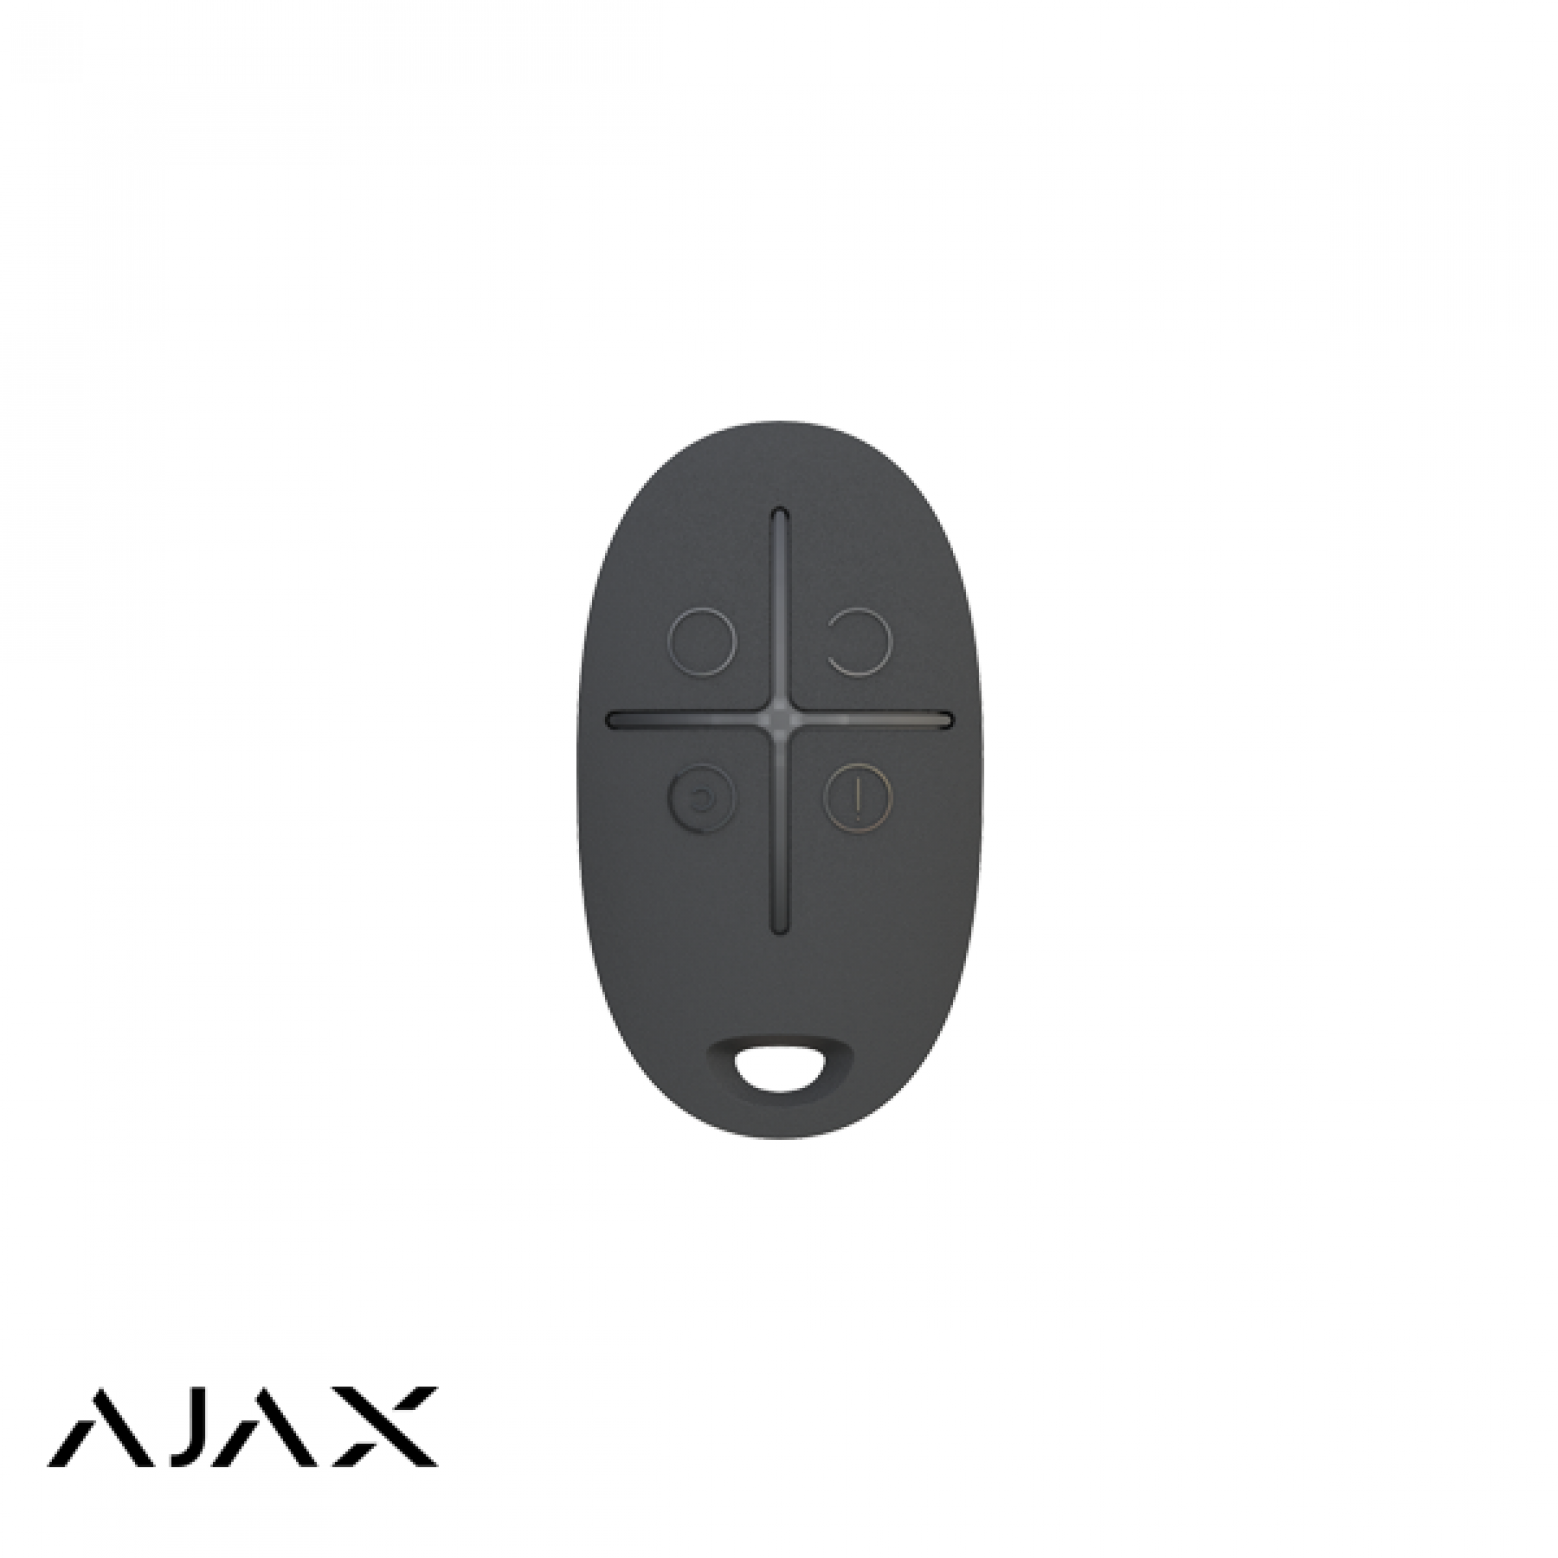 AJAX SpaceControl draadloze afstandsbediening